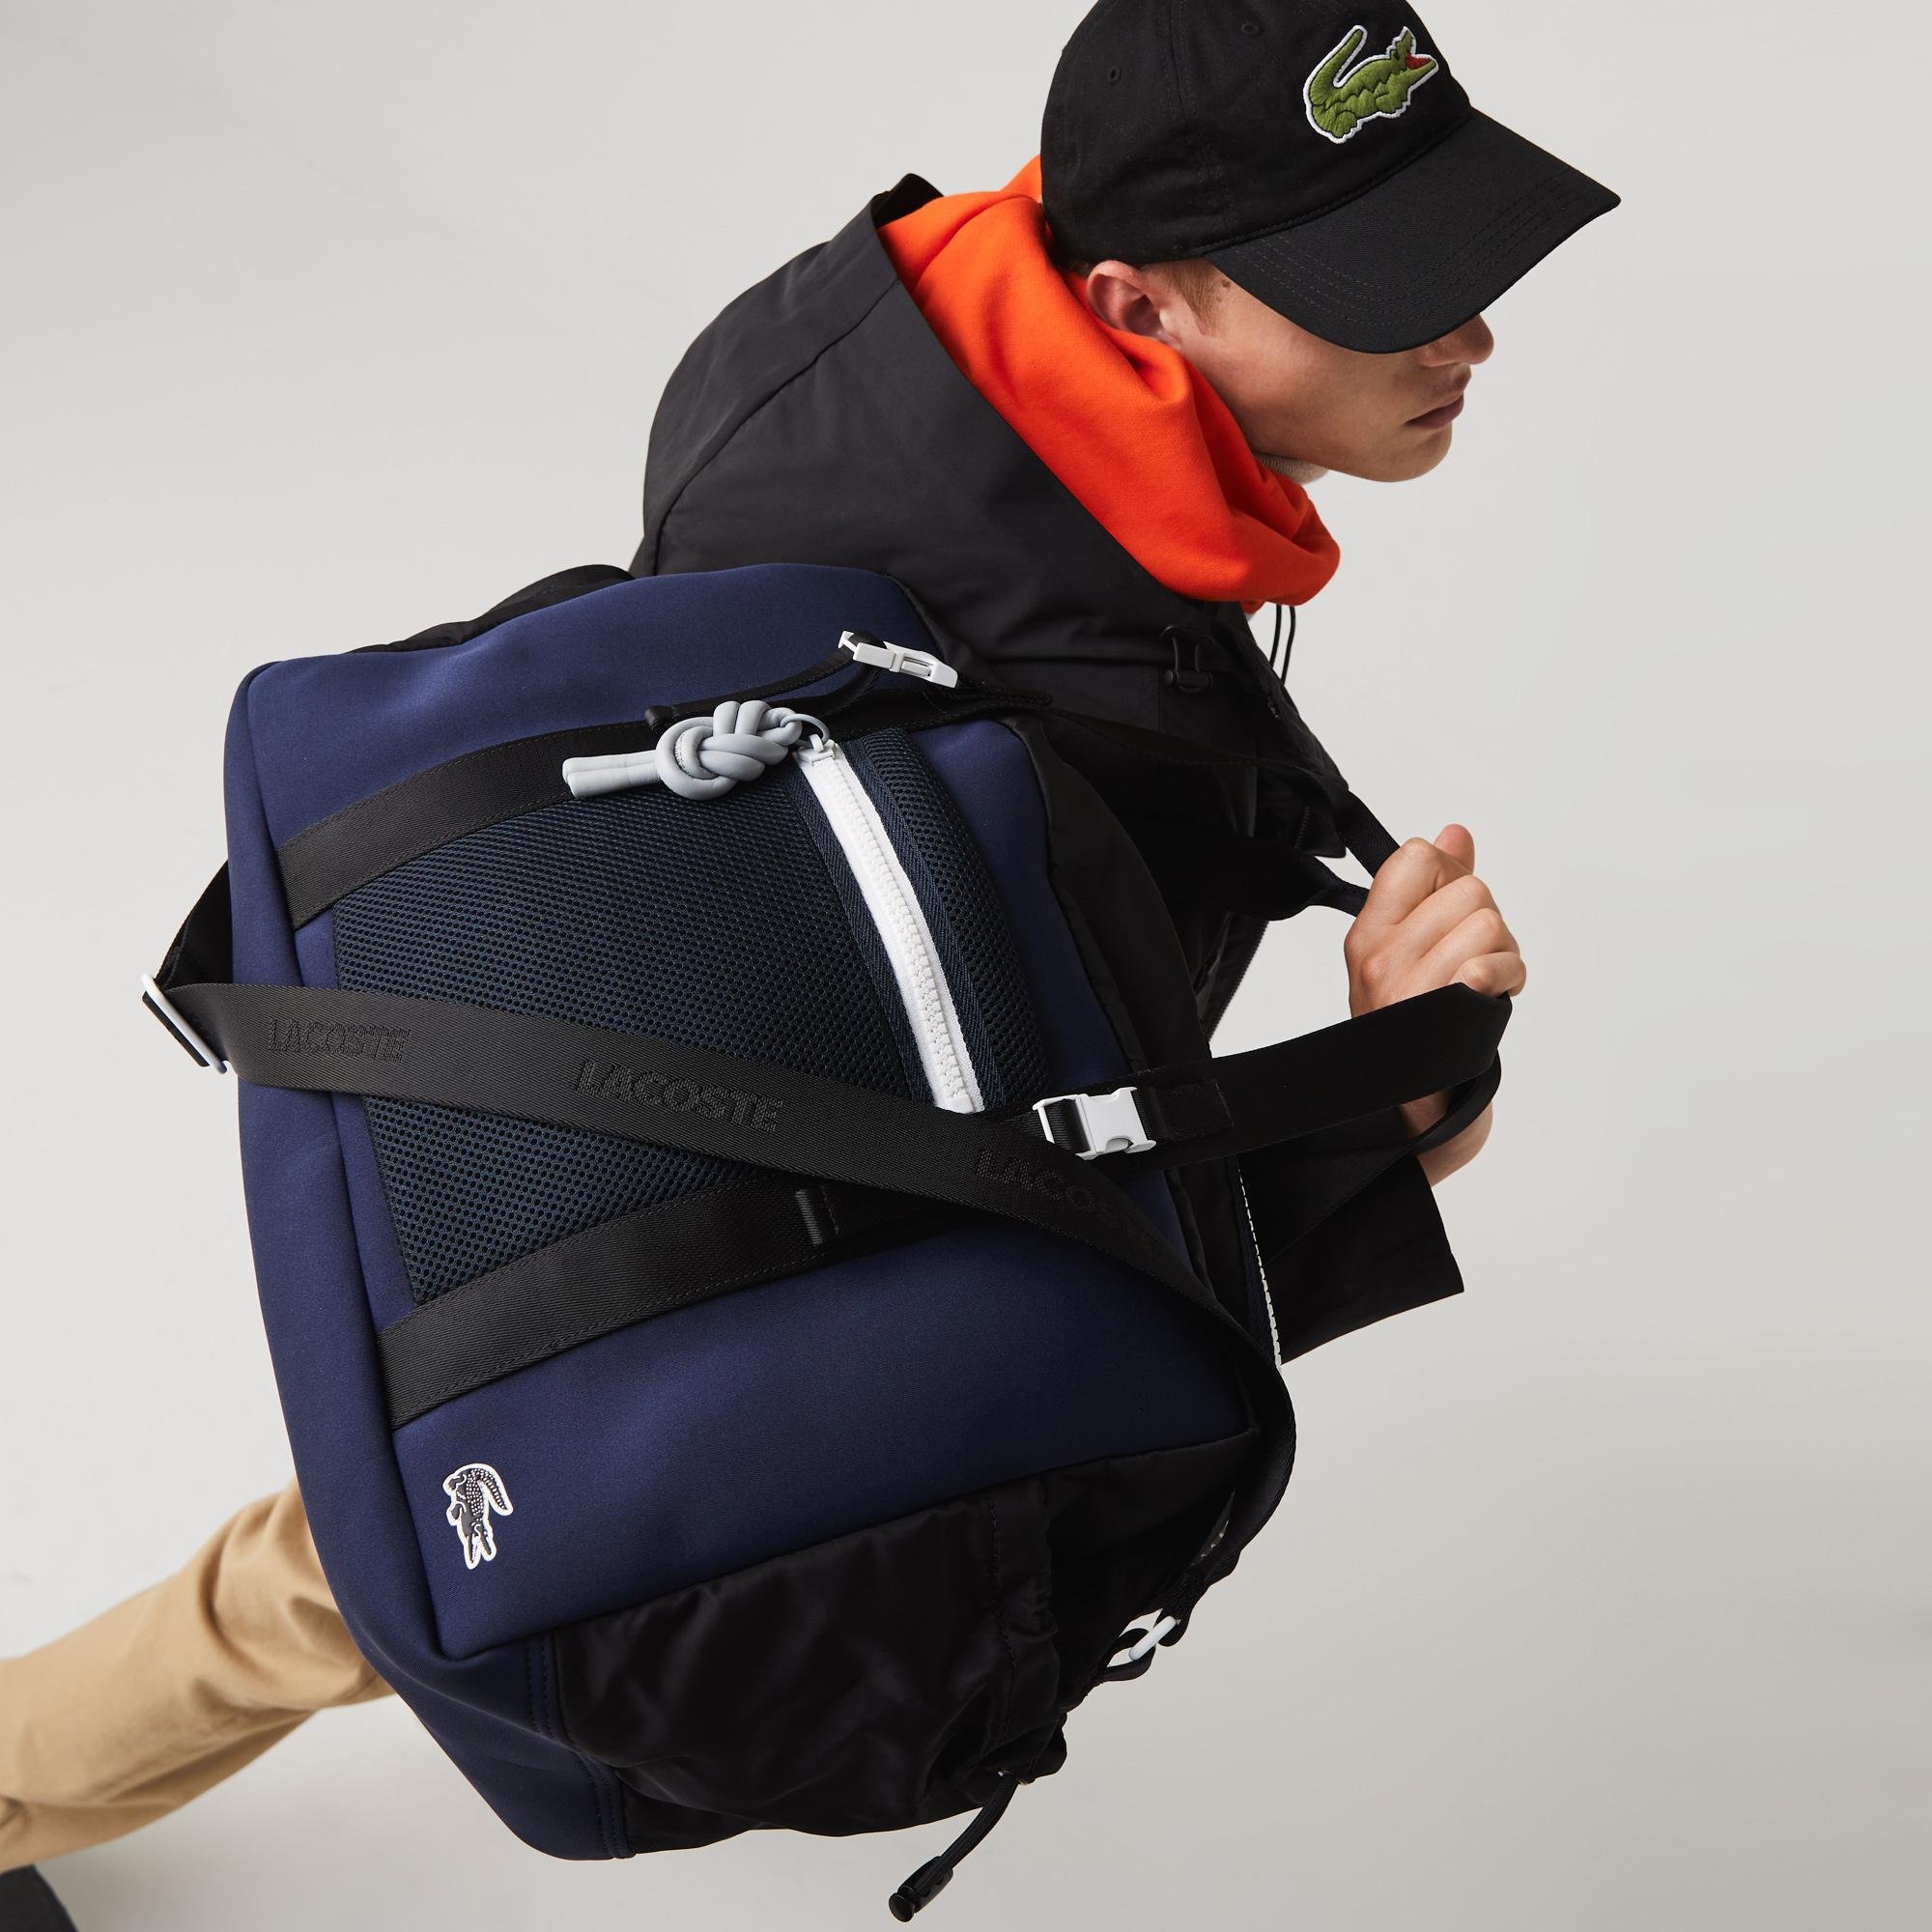 Lacoste Men's Motion Ultra-Light Zippered Gym Bag